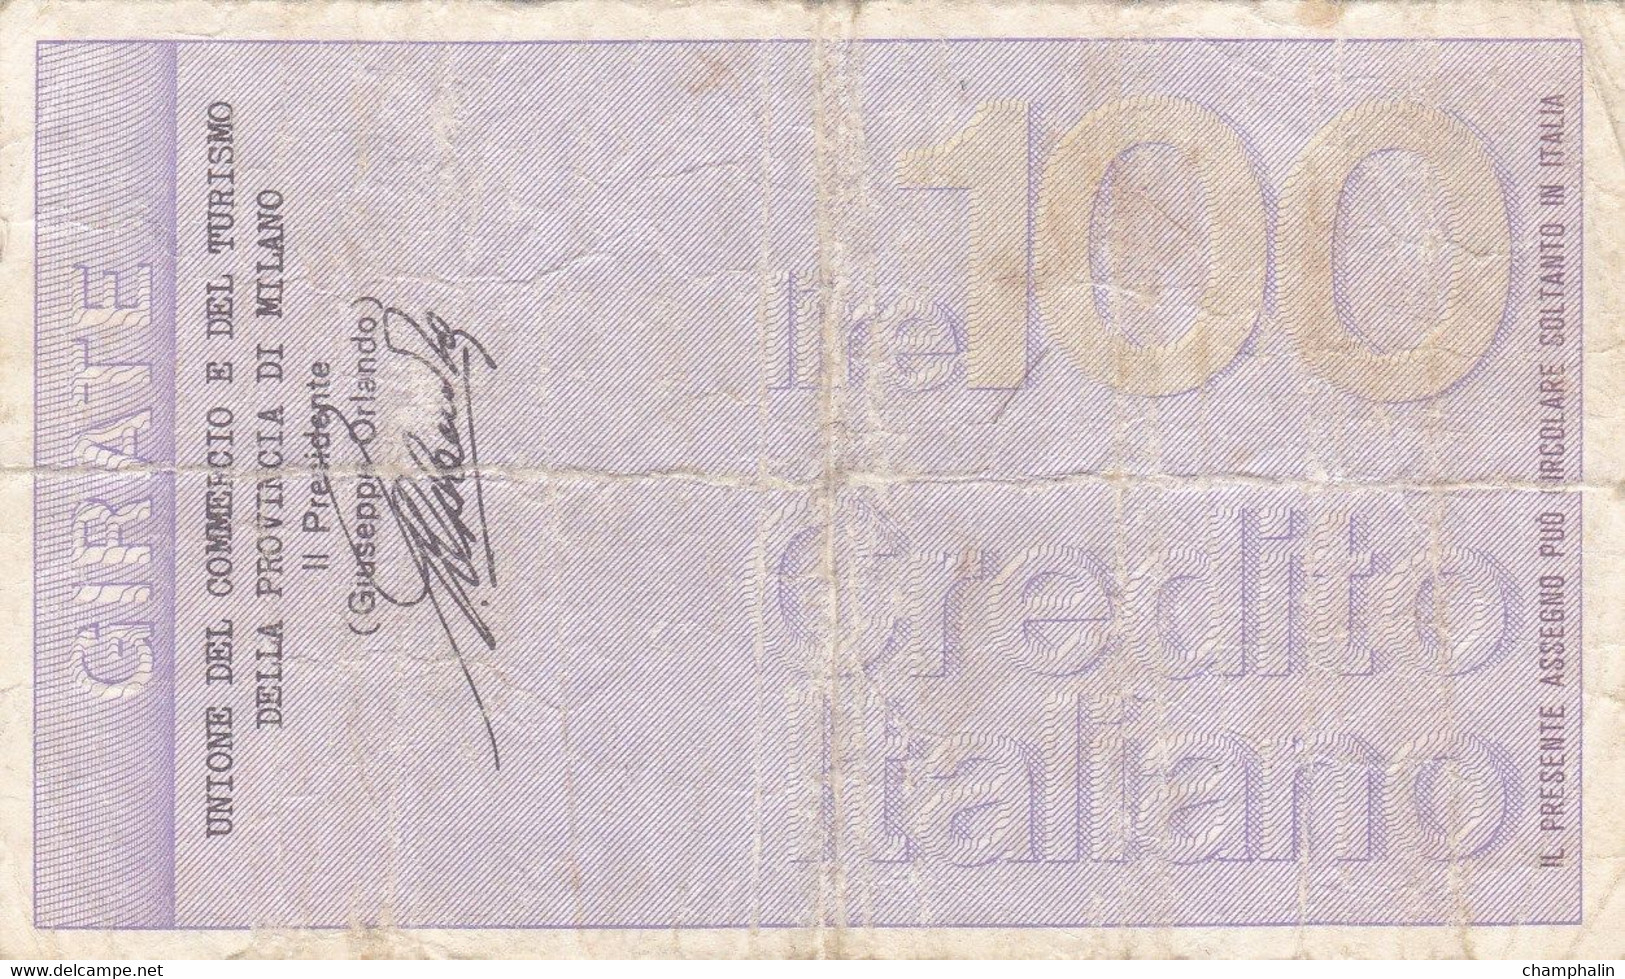 Italie - Billet De 100 Lire - Credito Italiano - 3 Septembre 1976 - Emissions Provisionnelles - Chèque - [ 4] Vorläufige Ausgaben